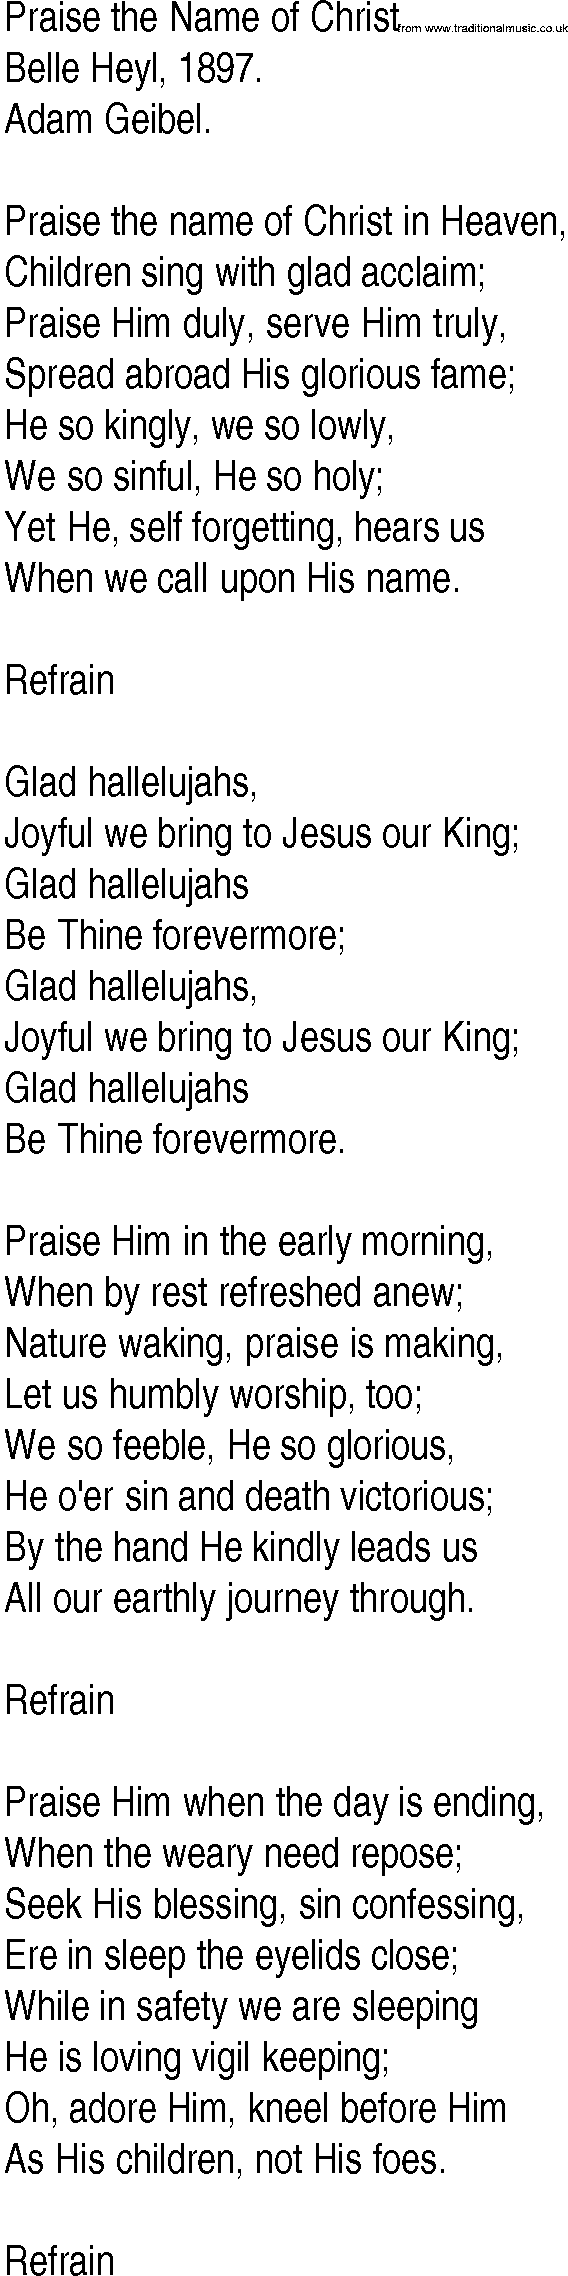 Hymn and Gospel Song: Praise the Name of Christ by Belle Heyl lyrics